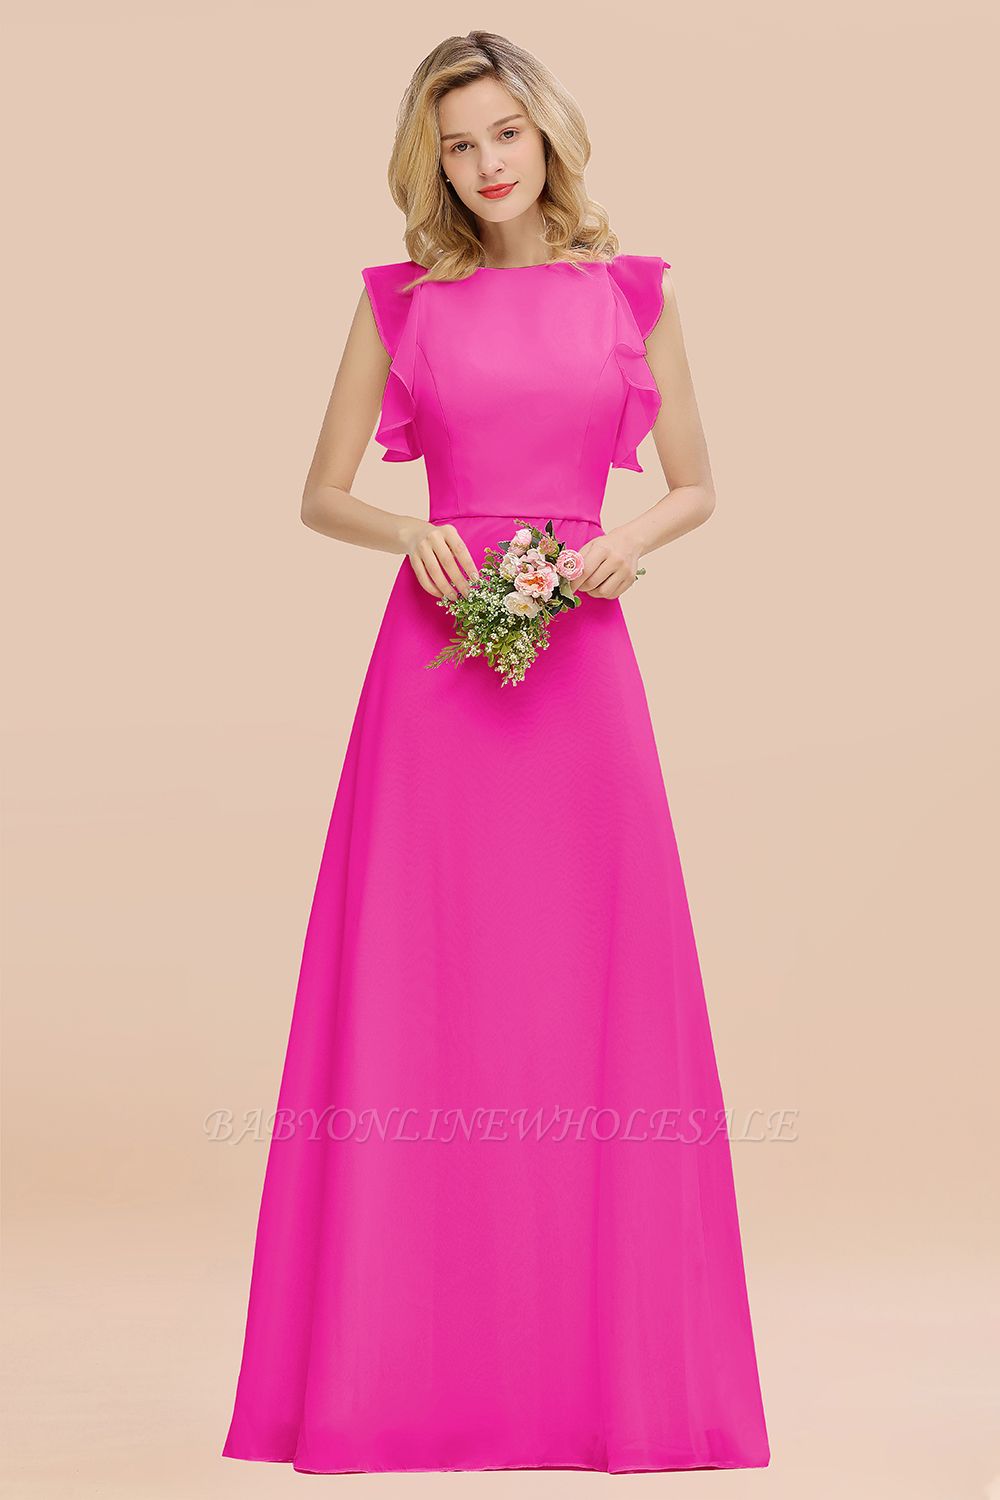 Cecilia | Chic Simple Jewel Sleeveless Bridesmaid Dress Online